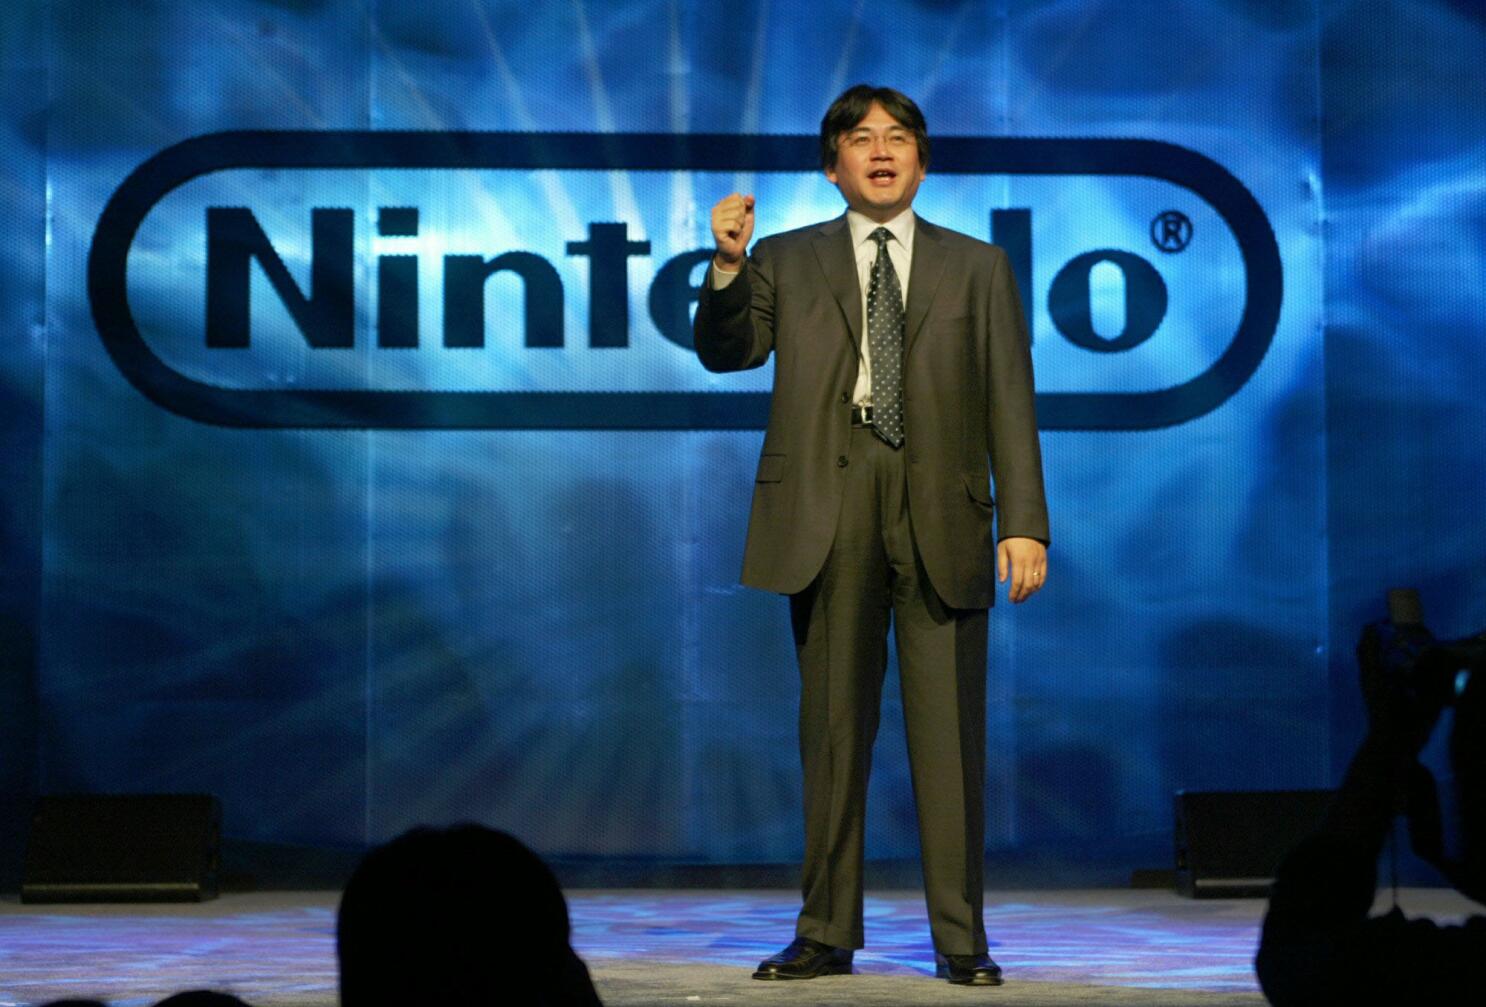 Satoru Iwata, President and CEO of Nintendo, Dead at 55